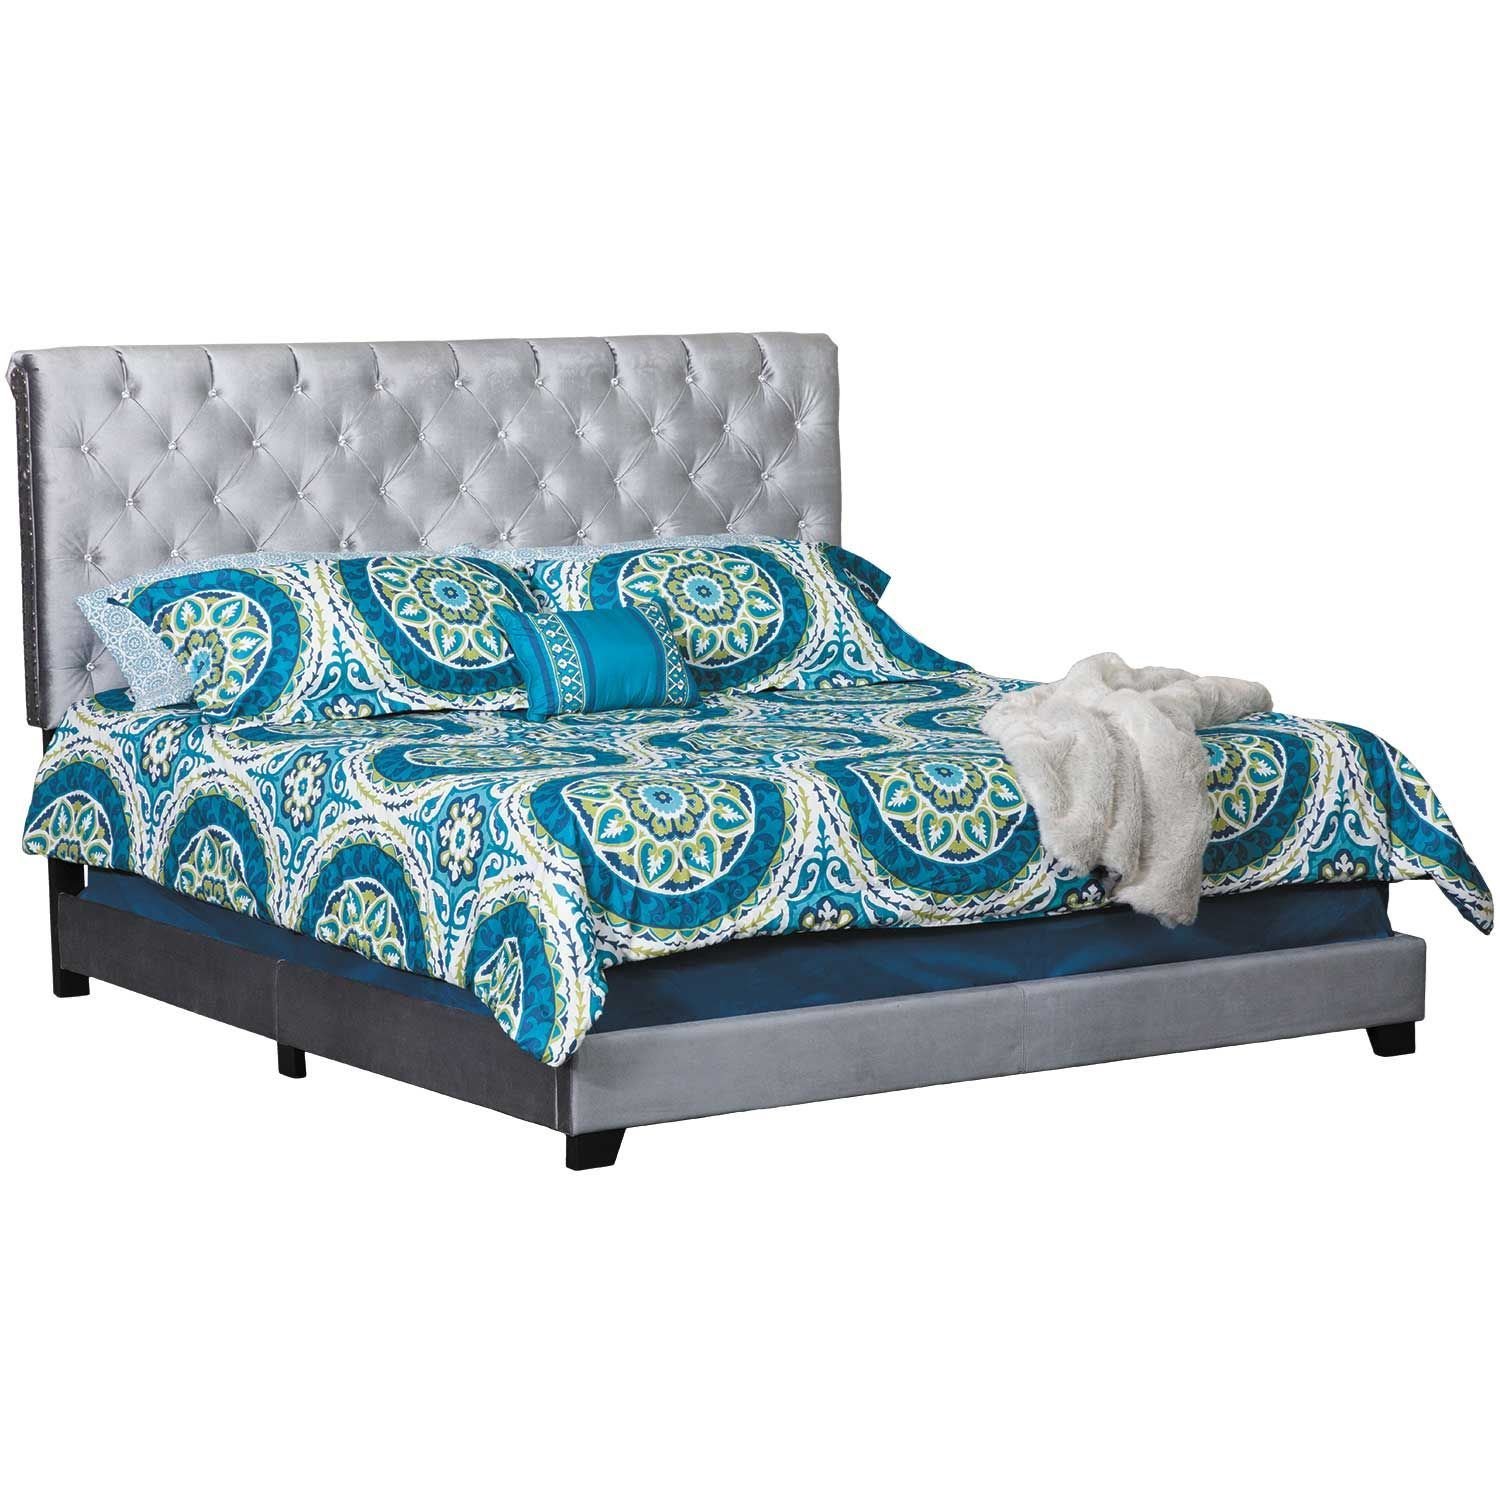 Rondsel Opsplitsen Vervormen Candace Complete Queen Bed | 2395-500 | AFW.com